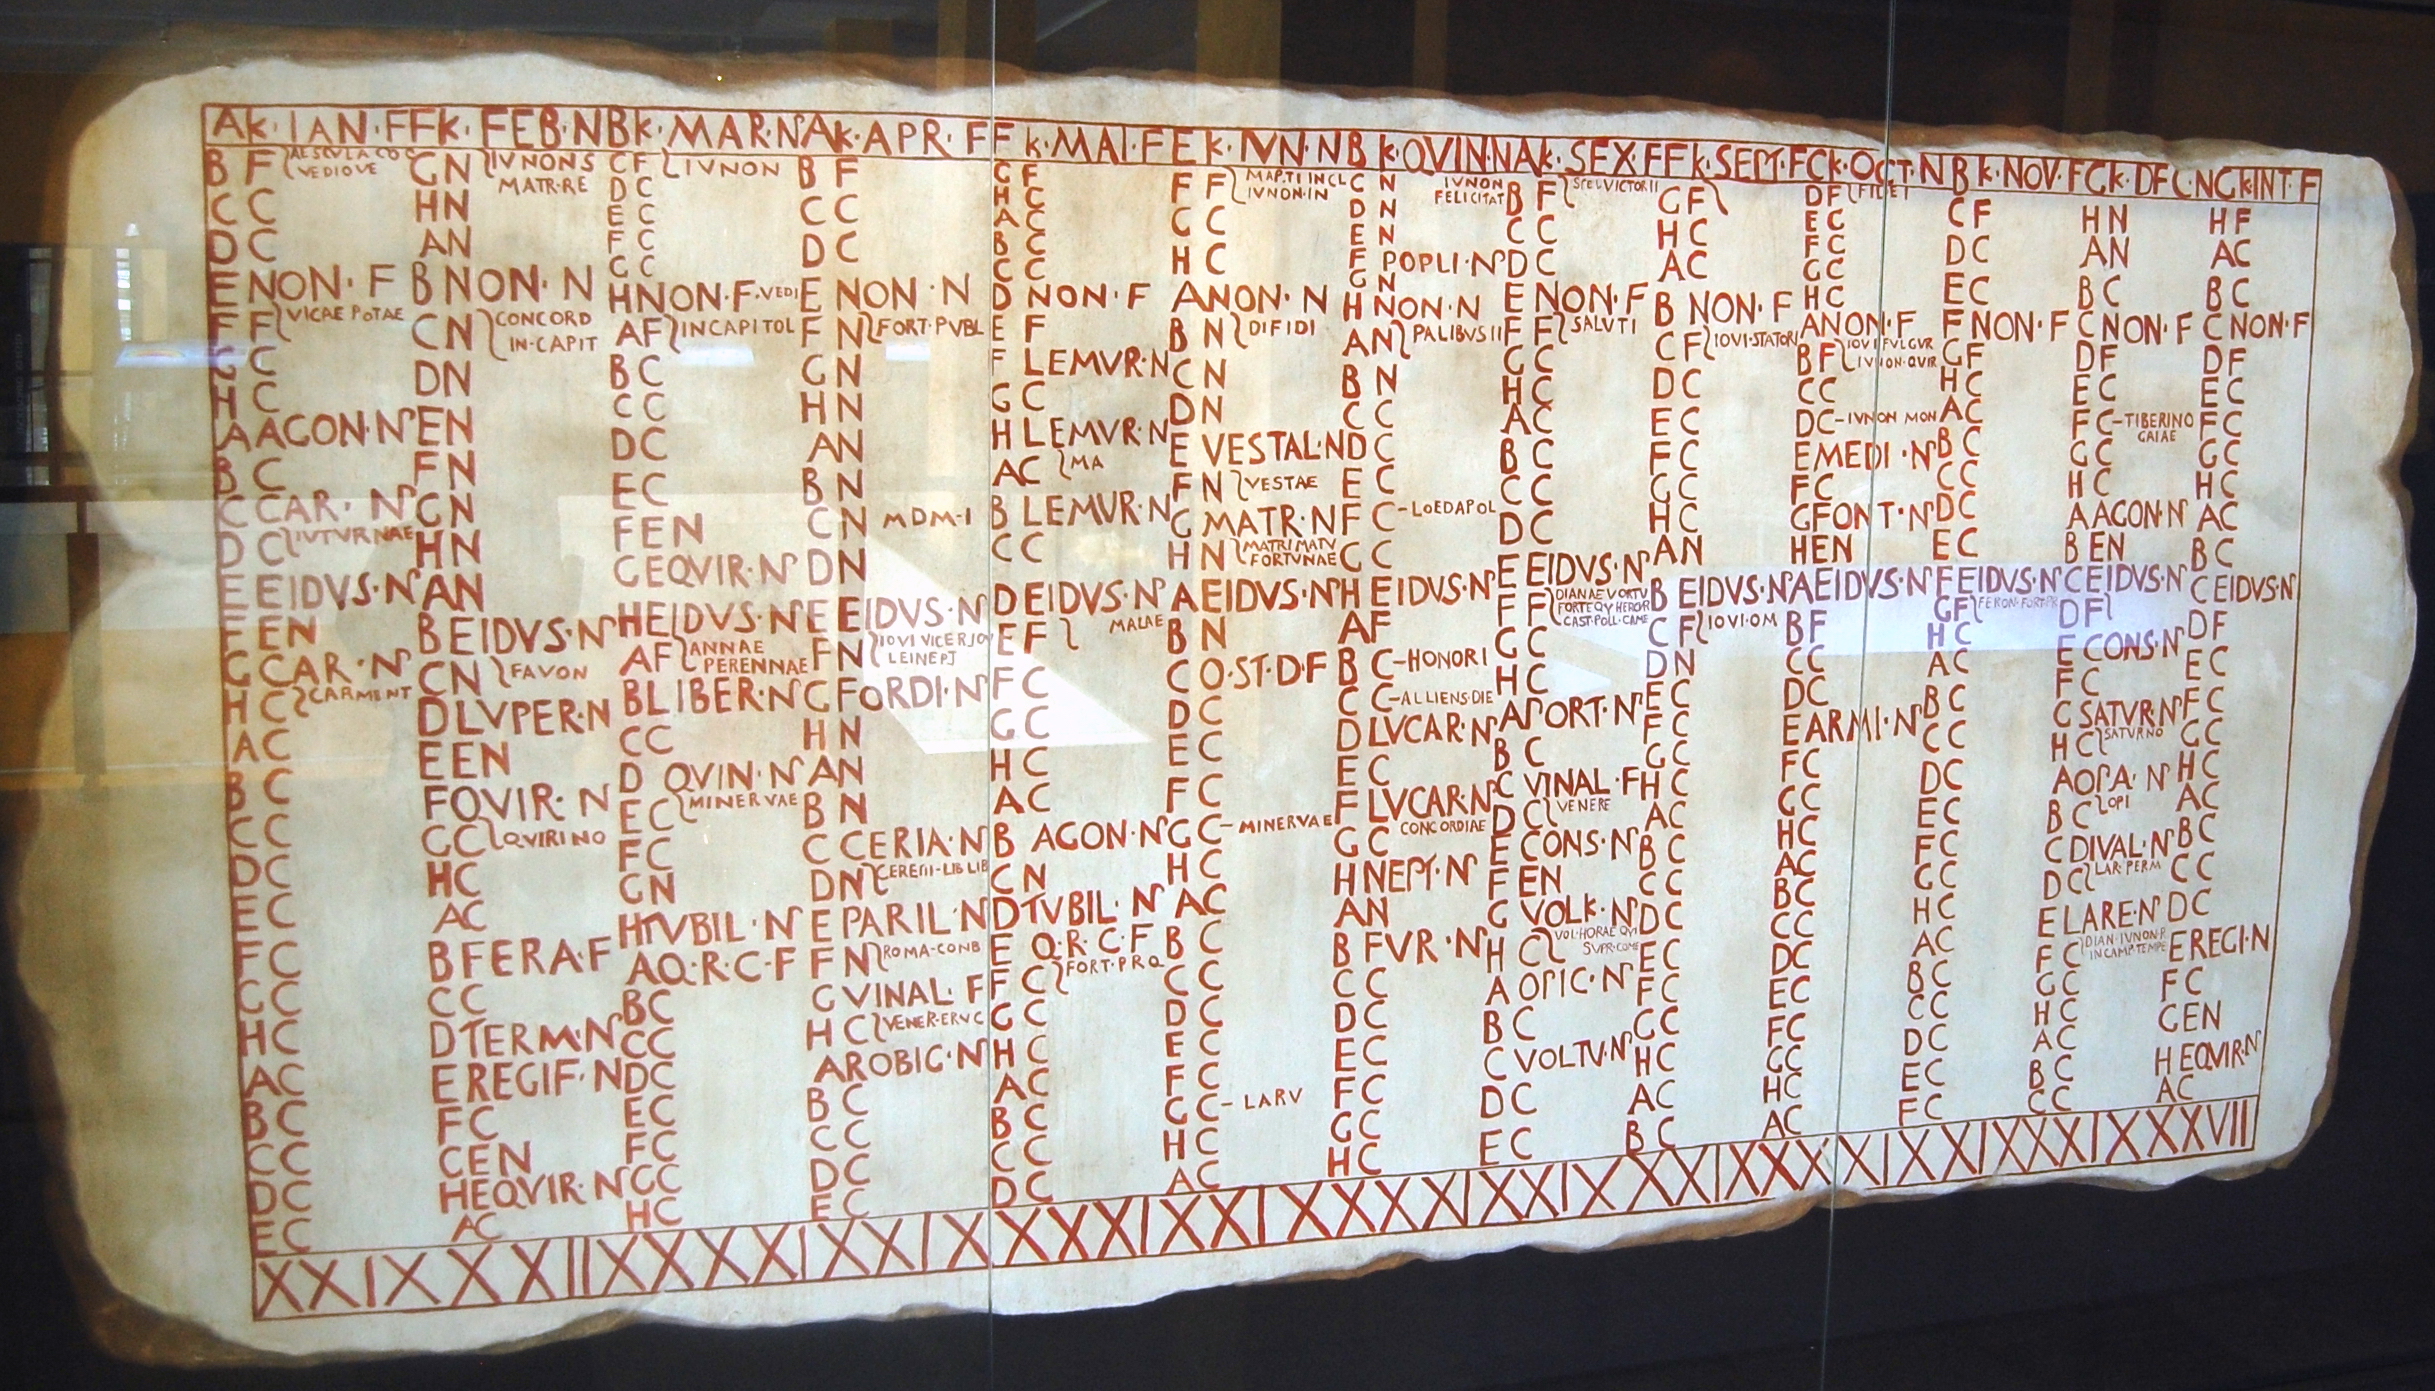 The Old Roman Calendar